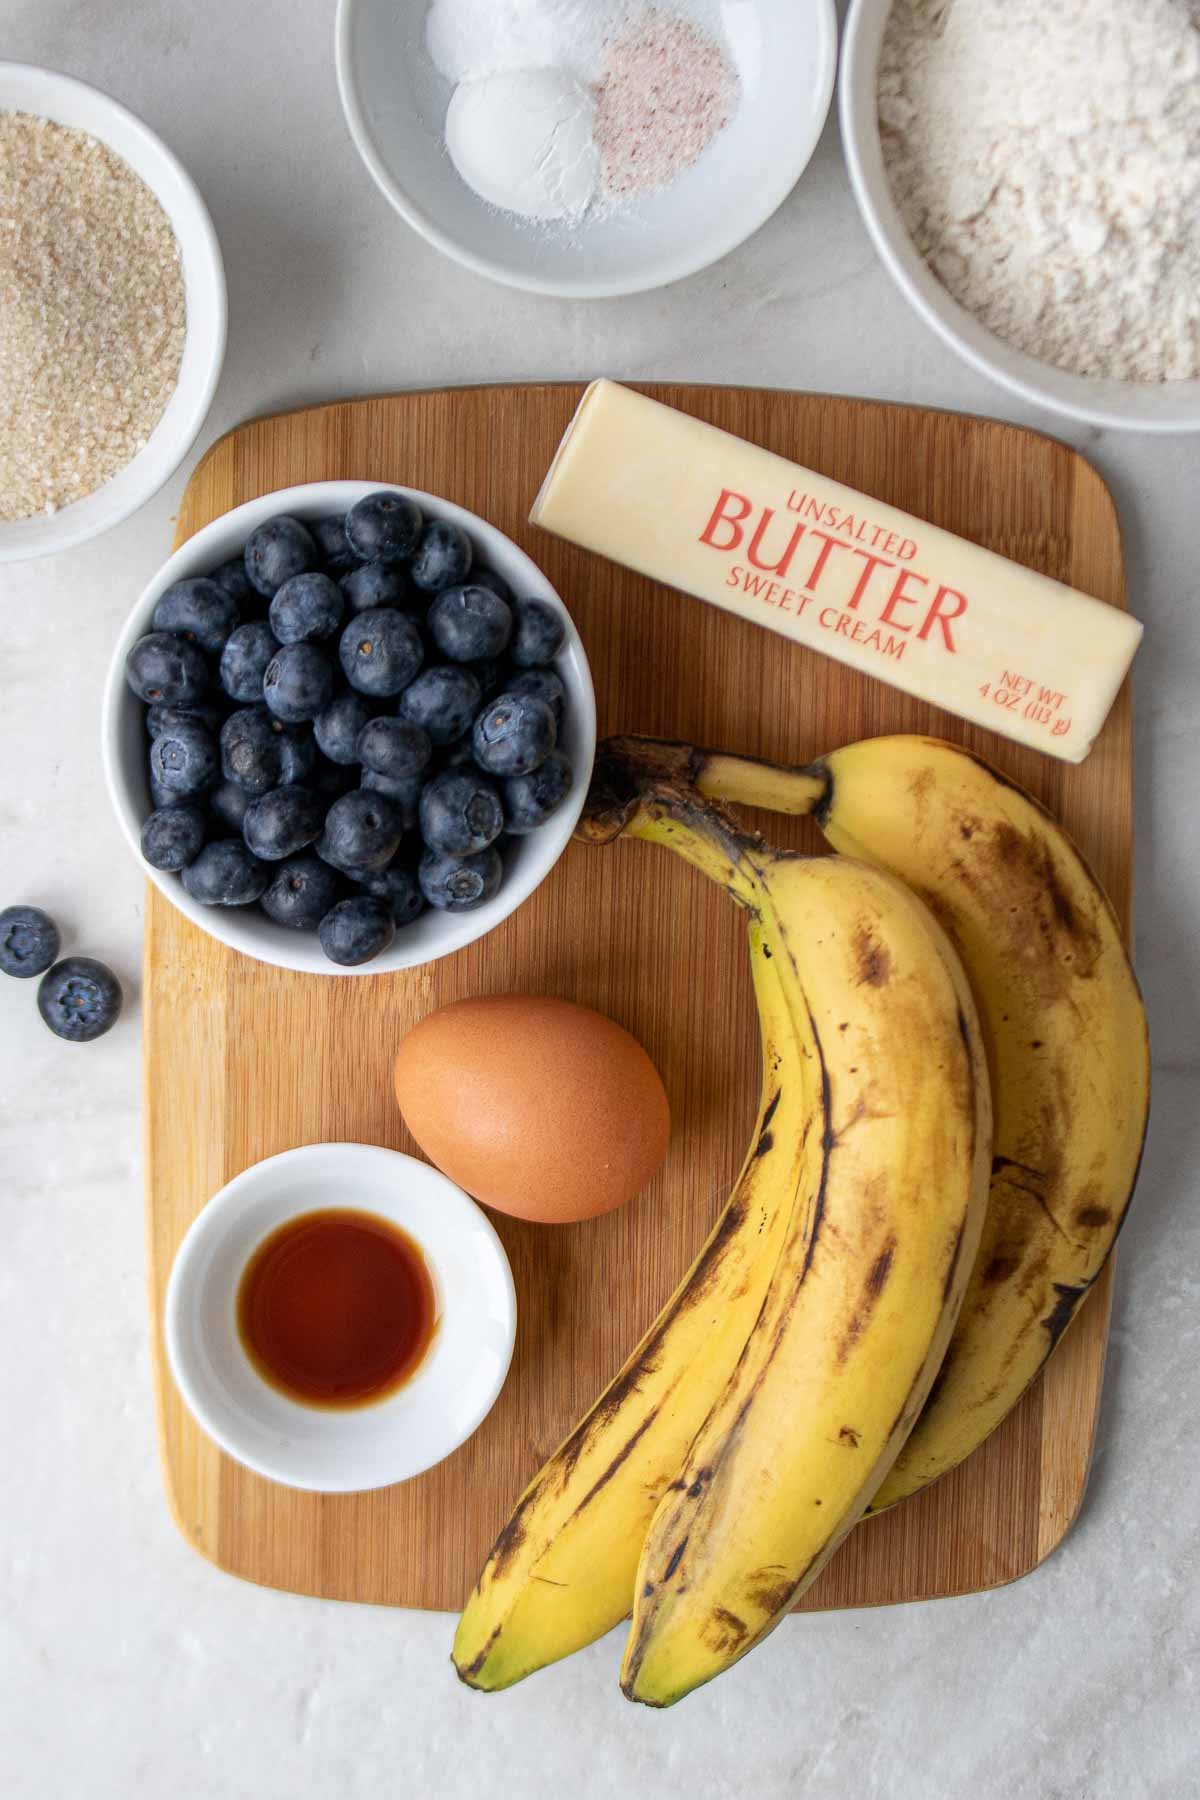 Ingredients for banana blueberry muffins: flour, baking soda, baking powder, salt, sugar, egg, vanilla extract, butter, bananas, blueberries